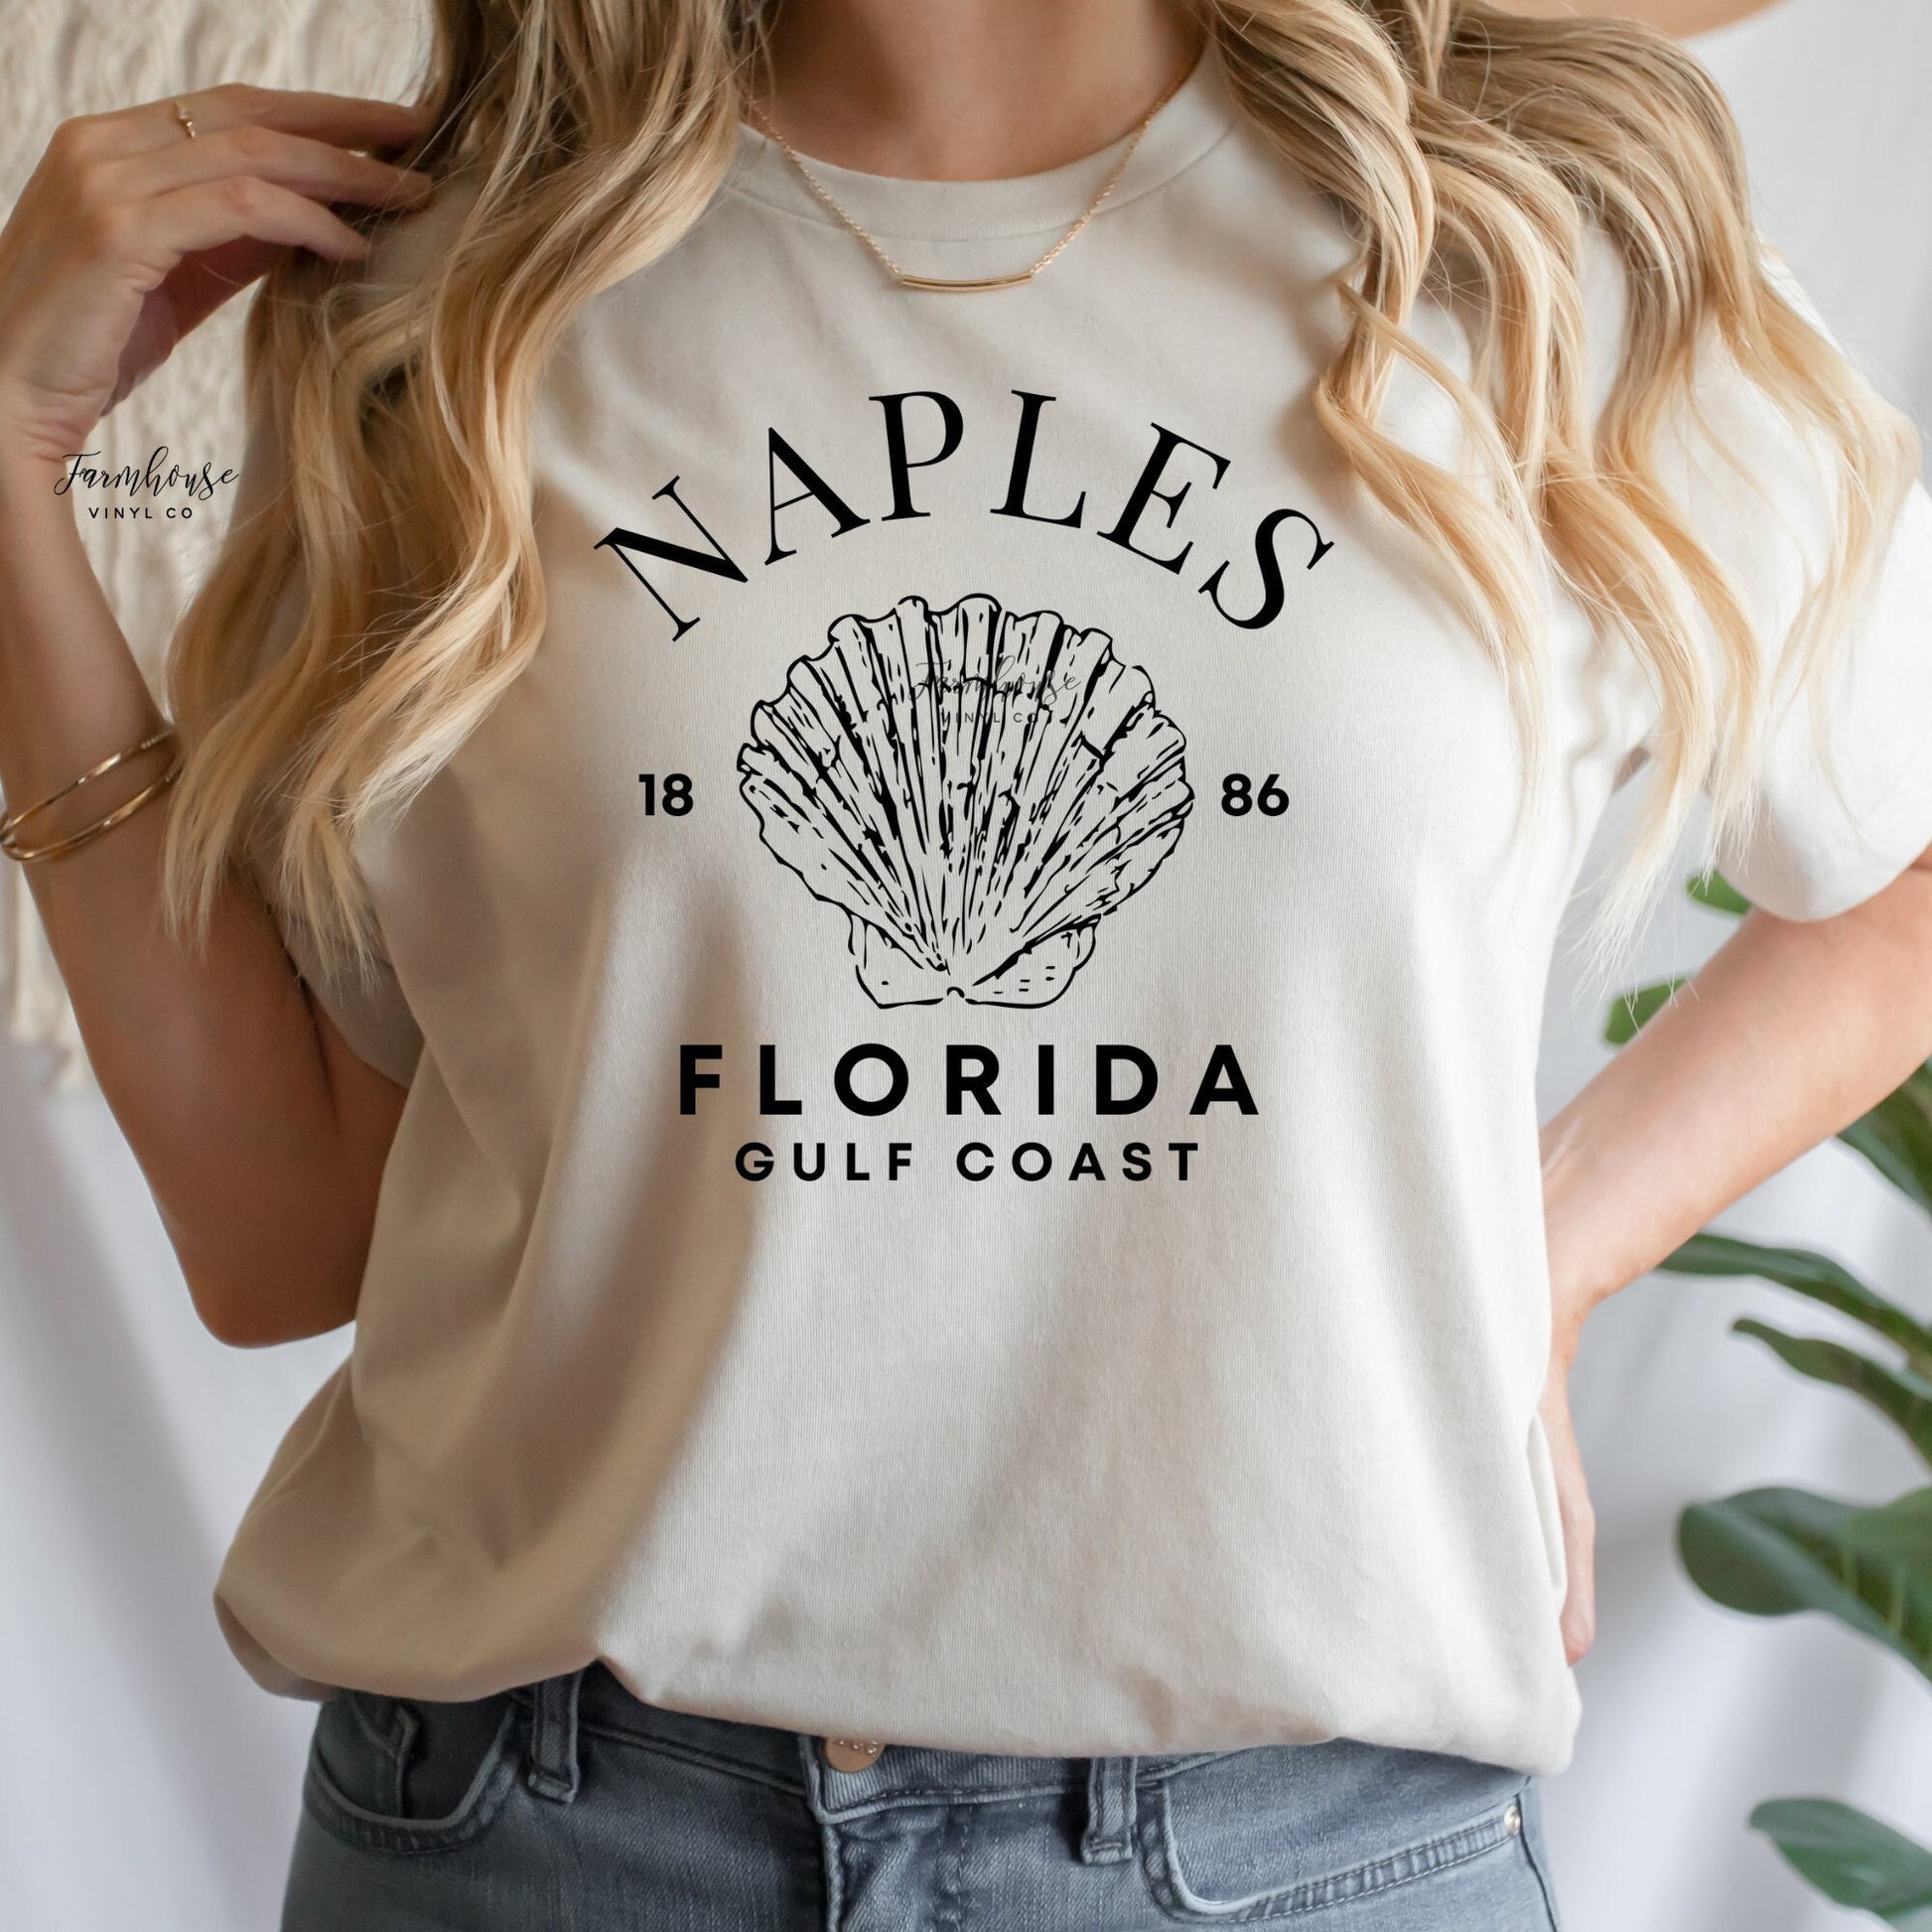 Naples Florida Seashell Shirt - Farmhouse Vinyl Co